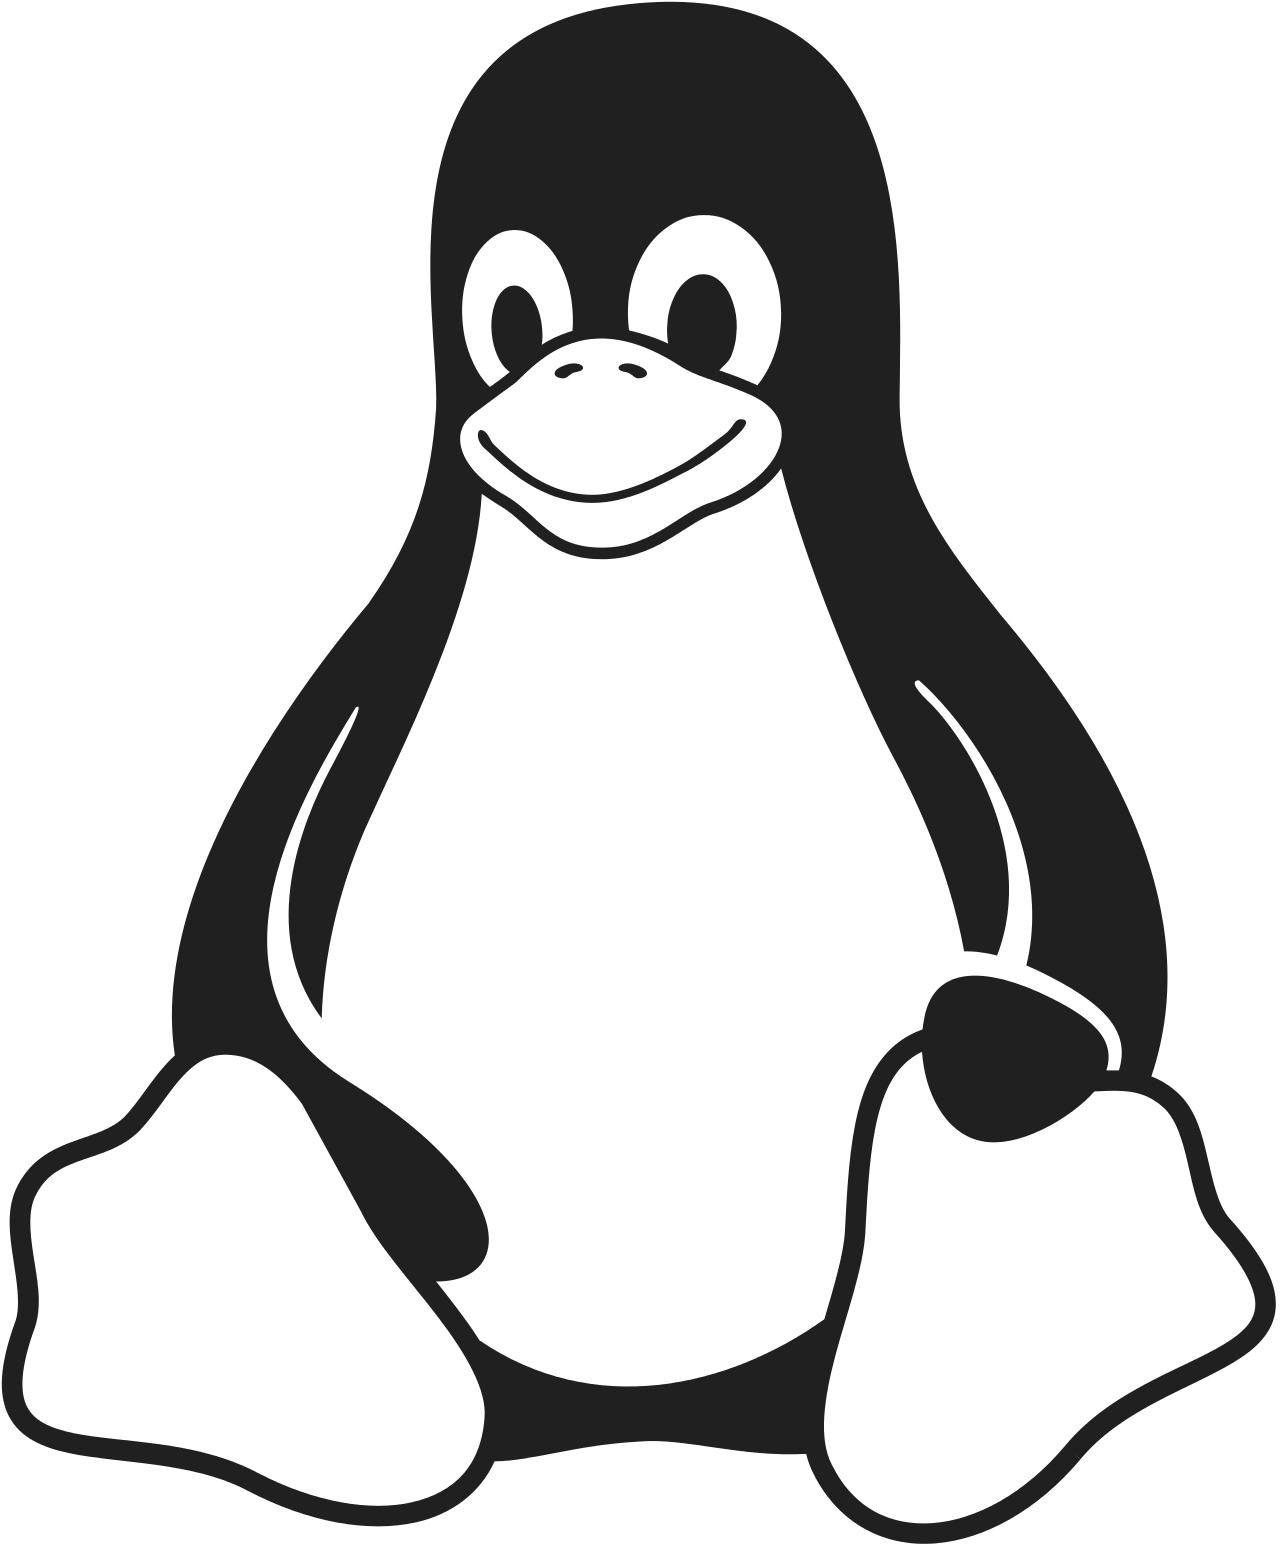 linux-logo@2x.png